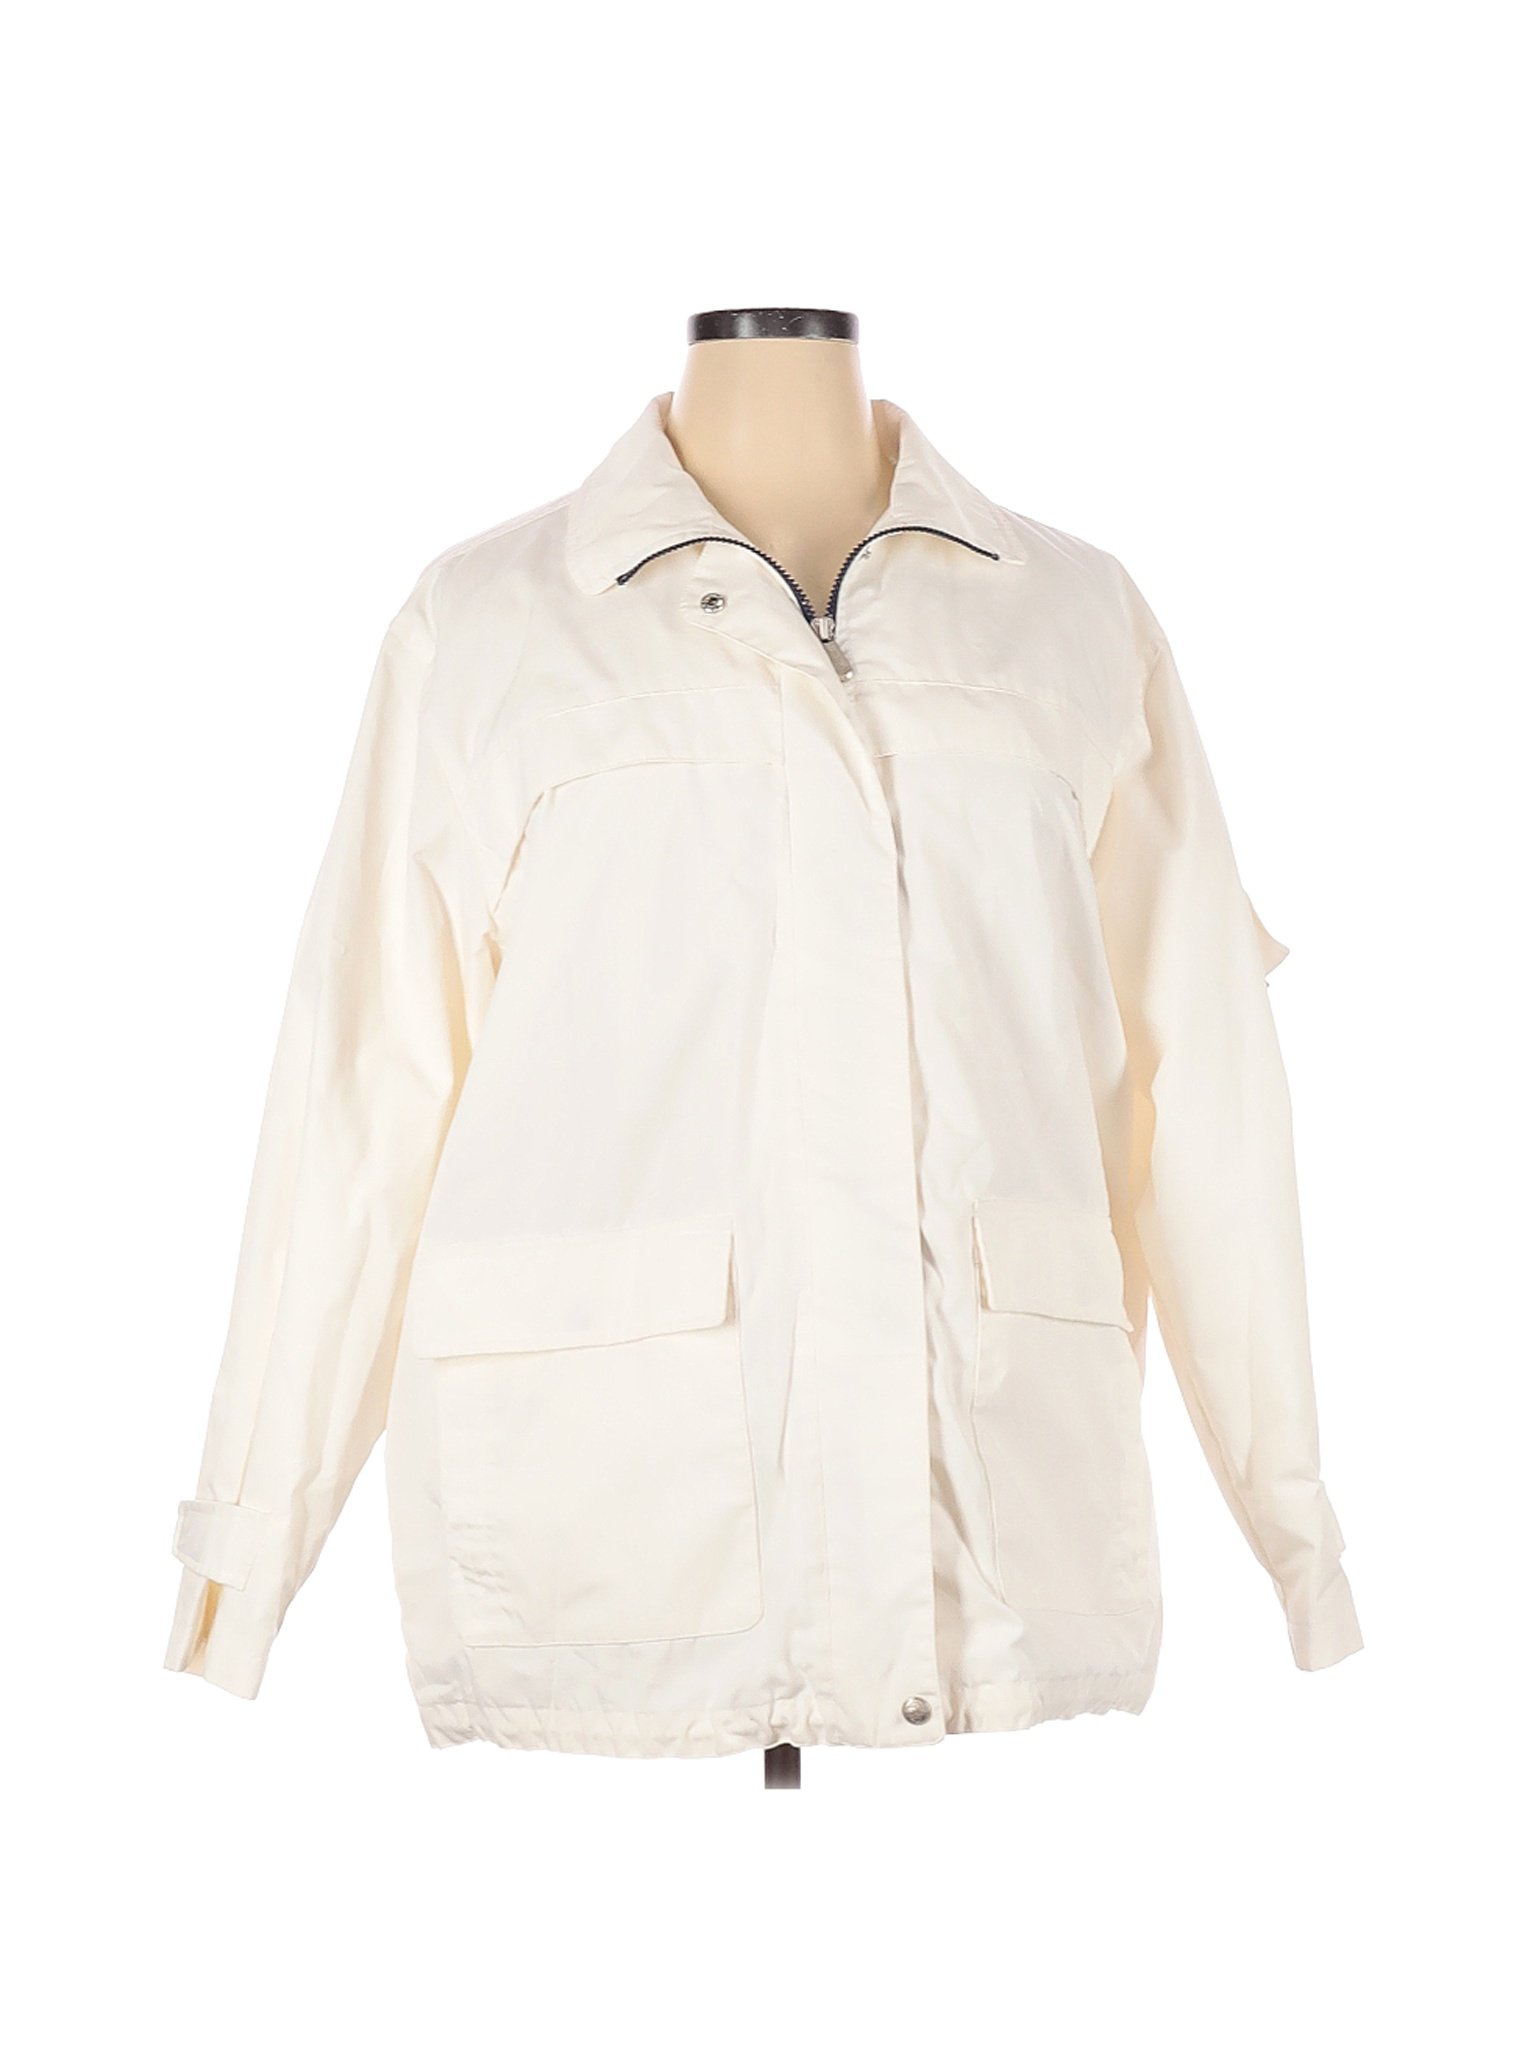 Pacific Trail Women Ivory Jacket XL | eBay